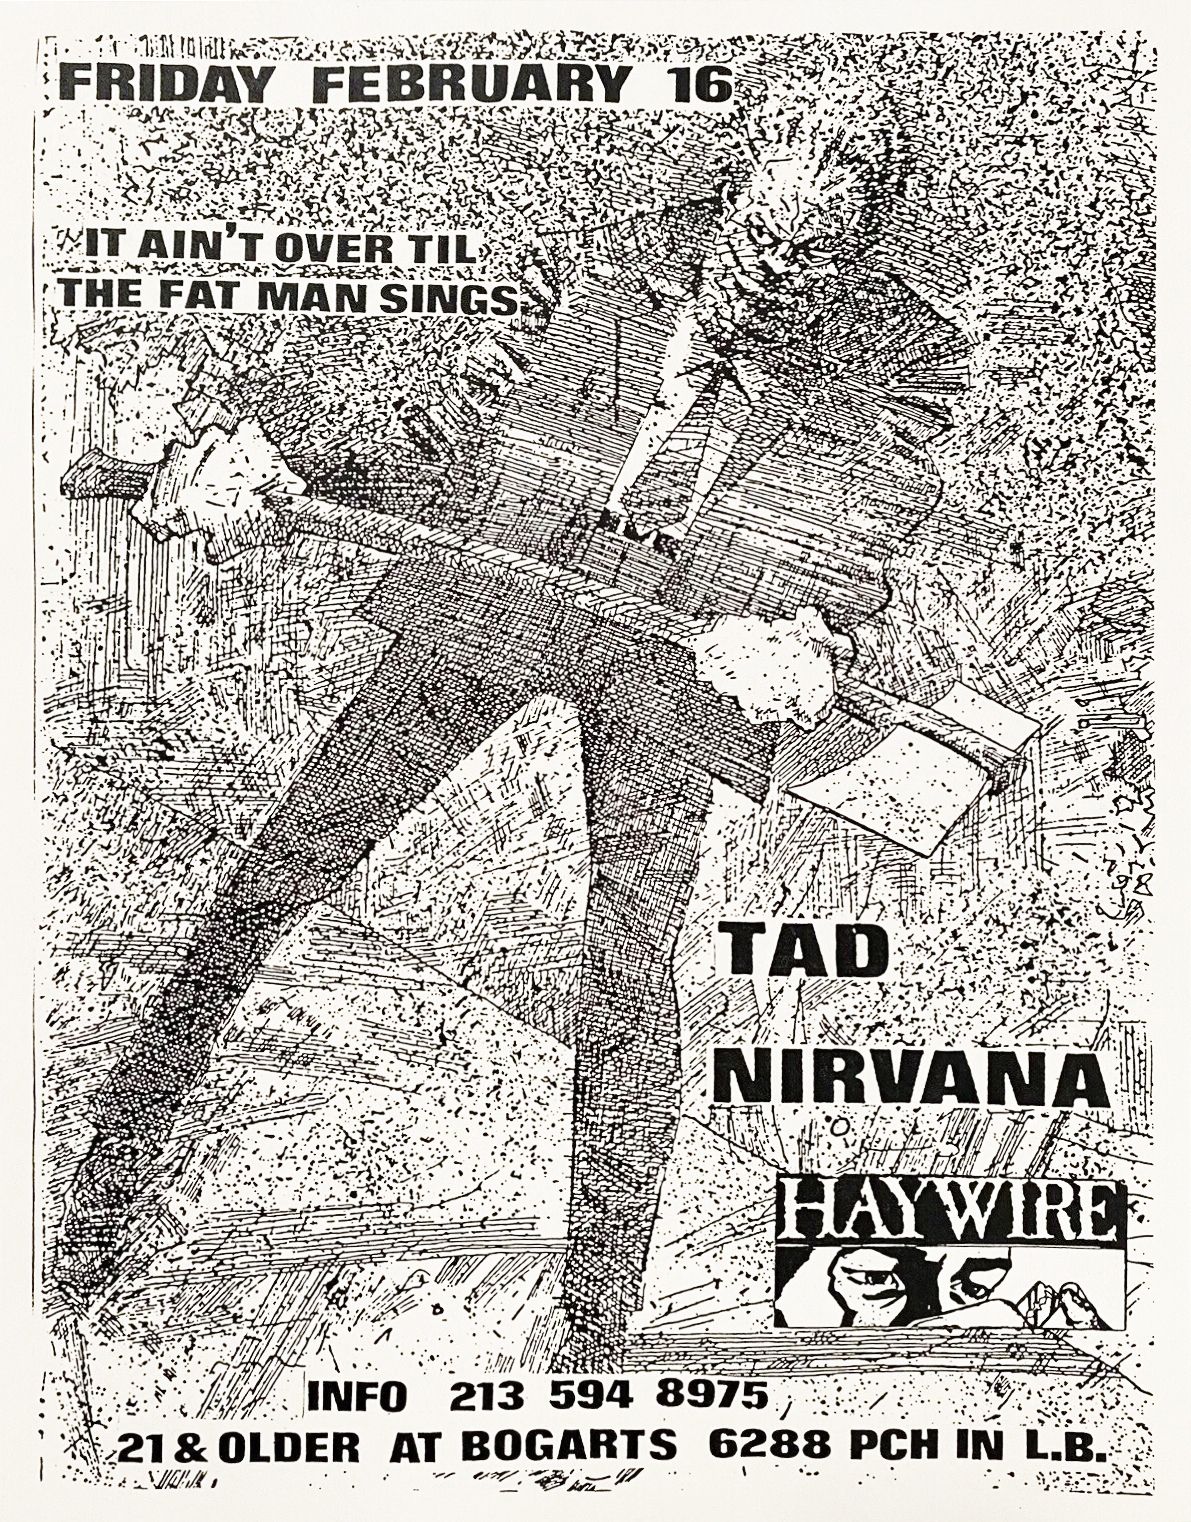 Nirvana & Tad Bogarts 1990 Concert Poster